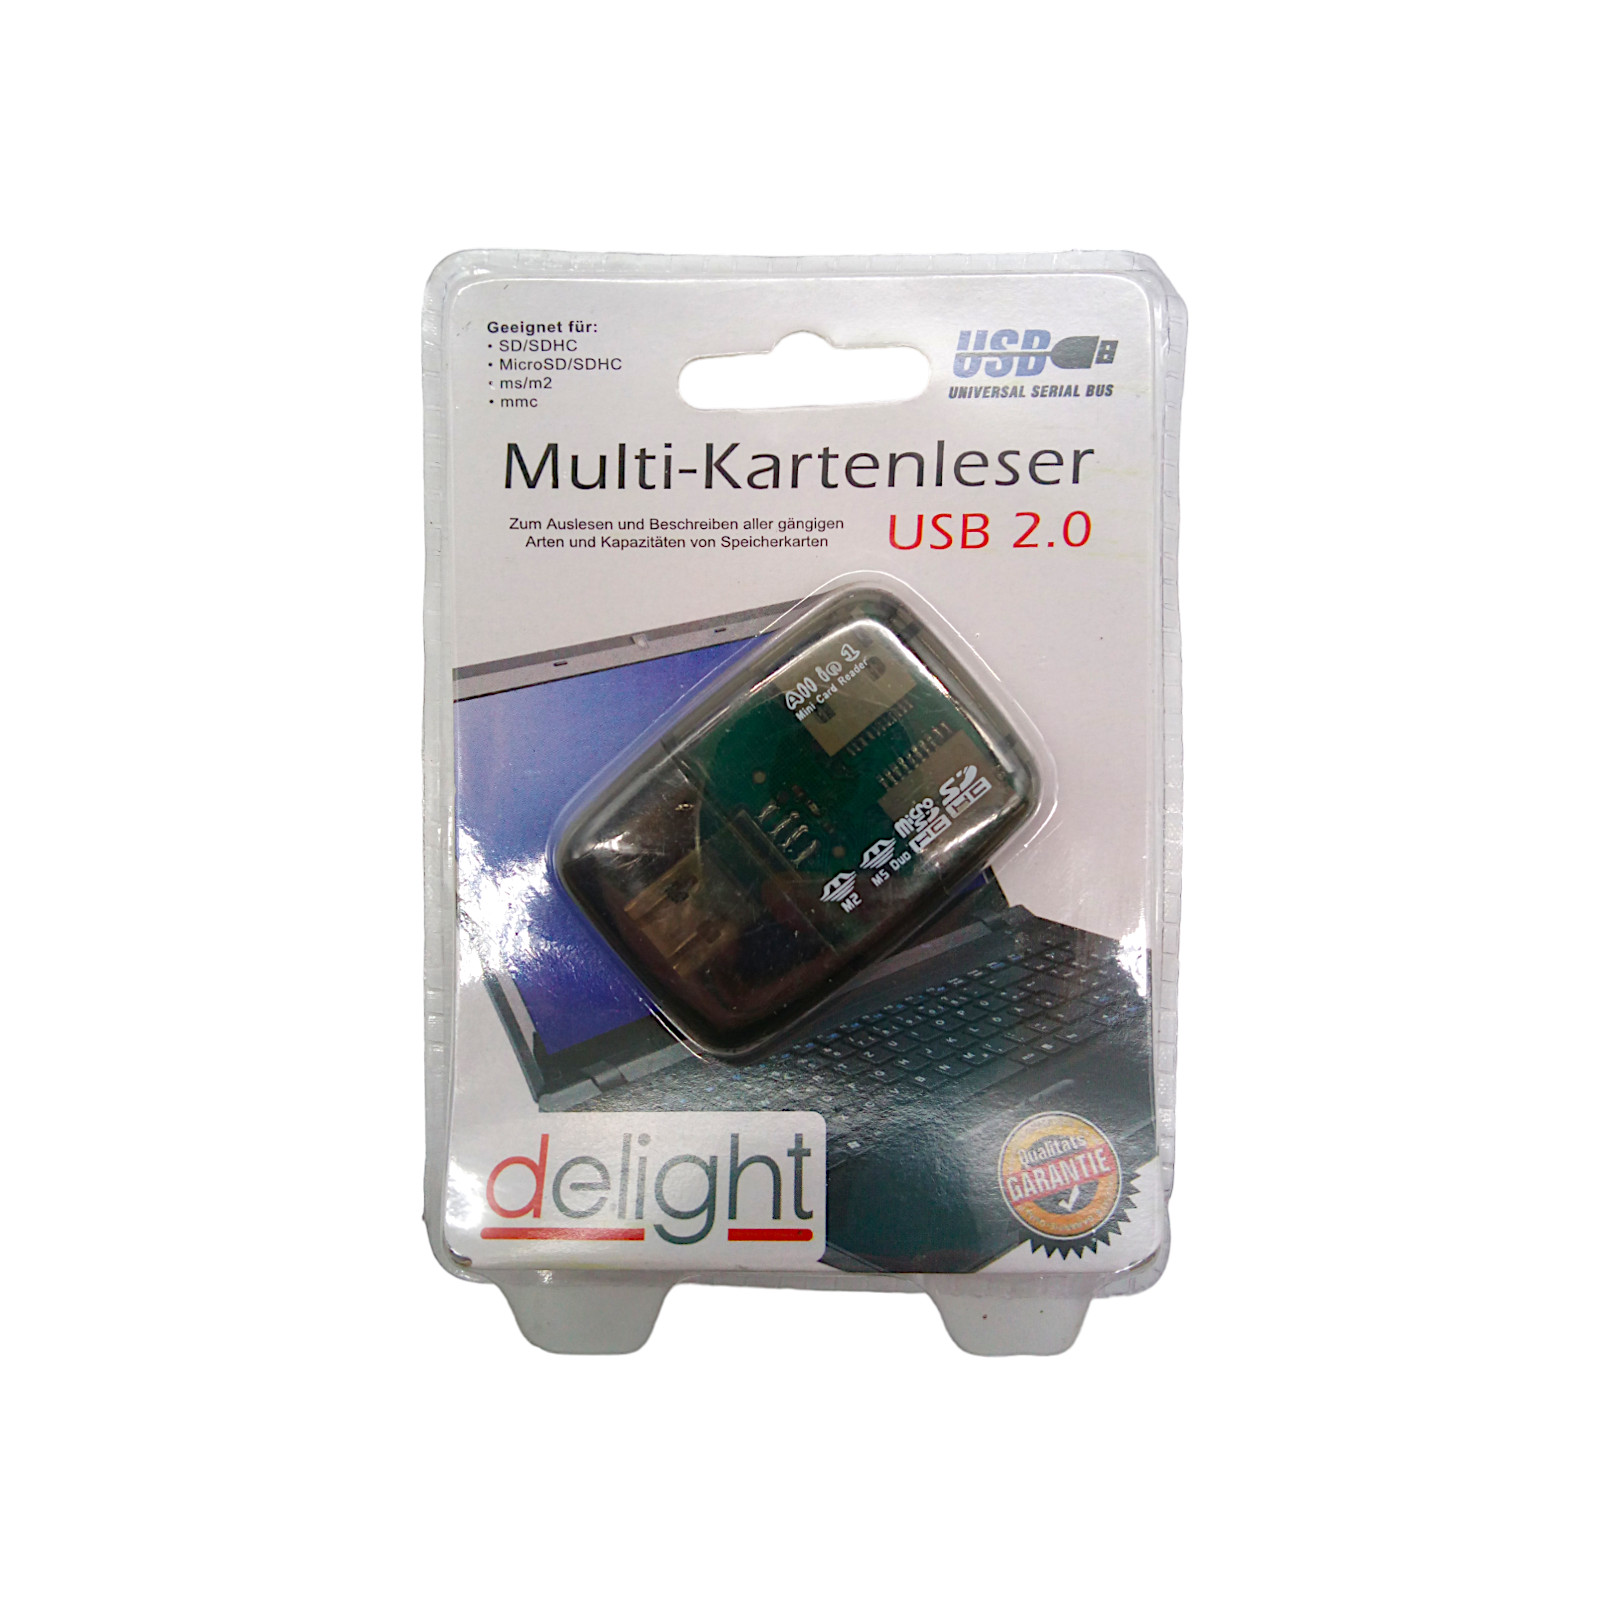 USB 2.0 Multi Kartenlesegerät